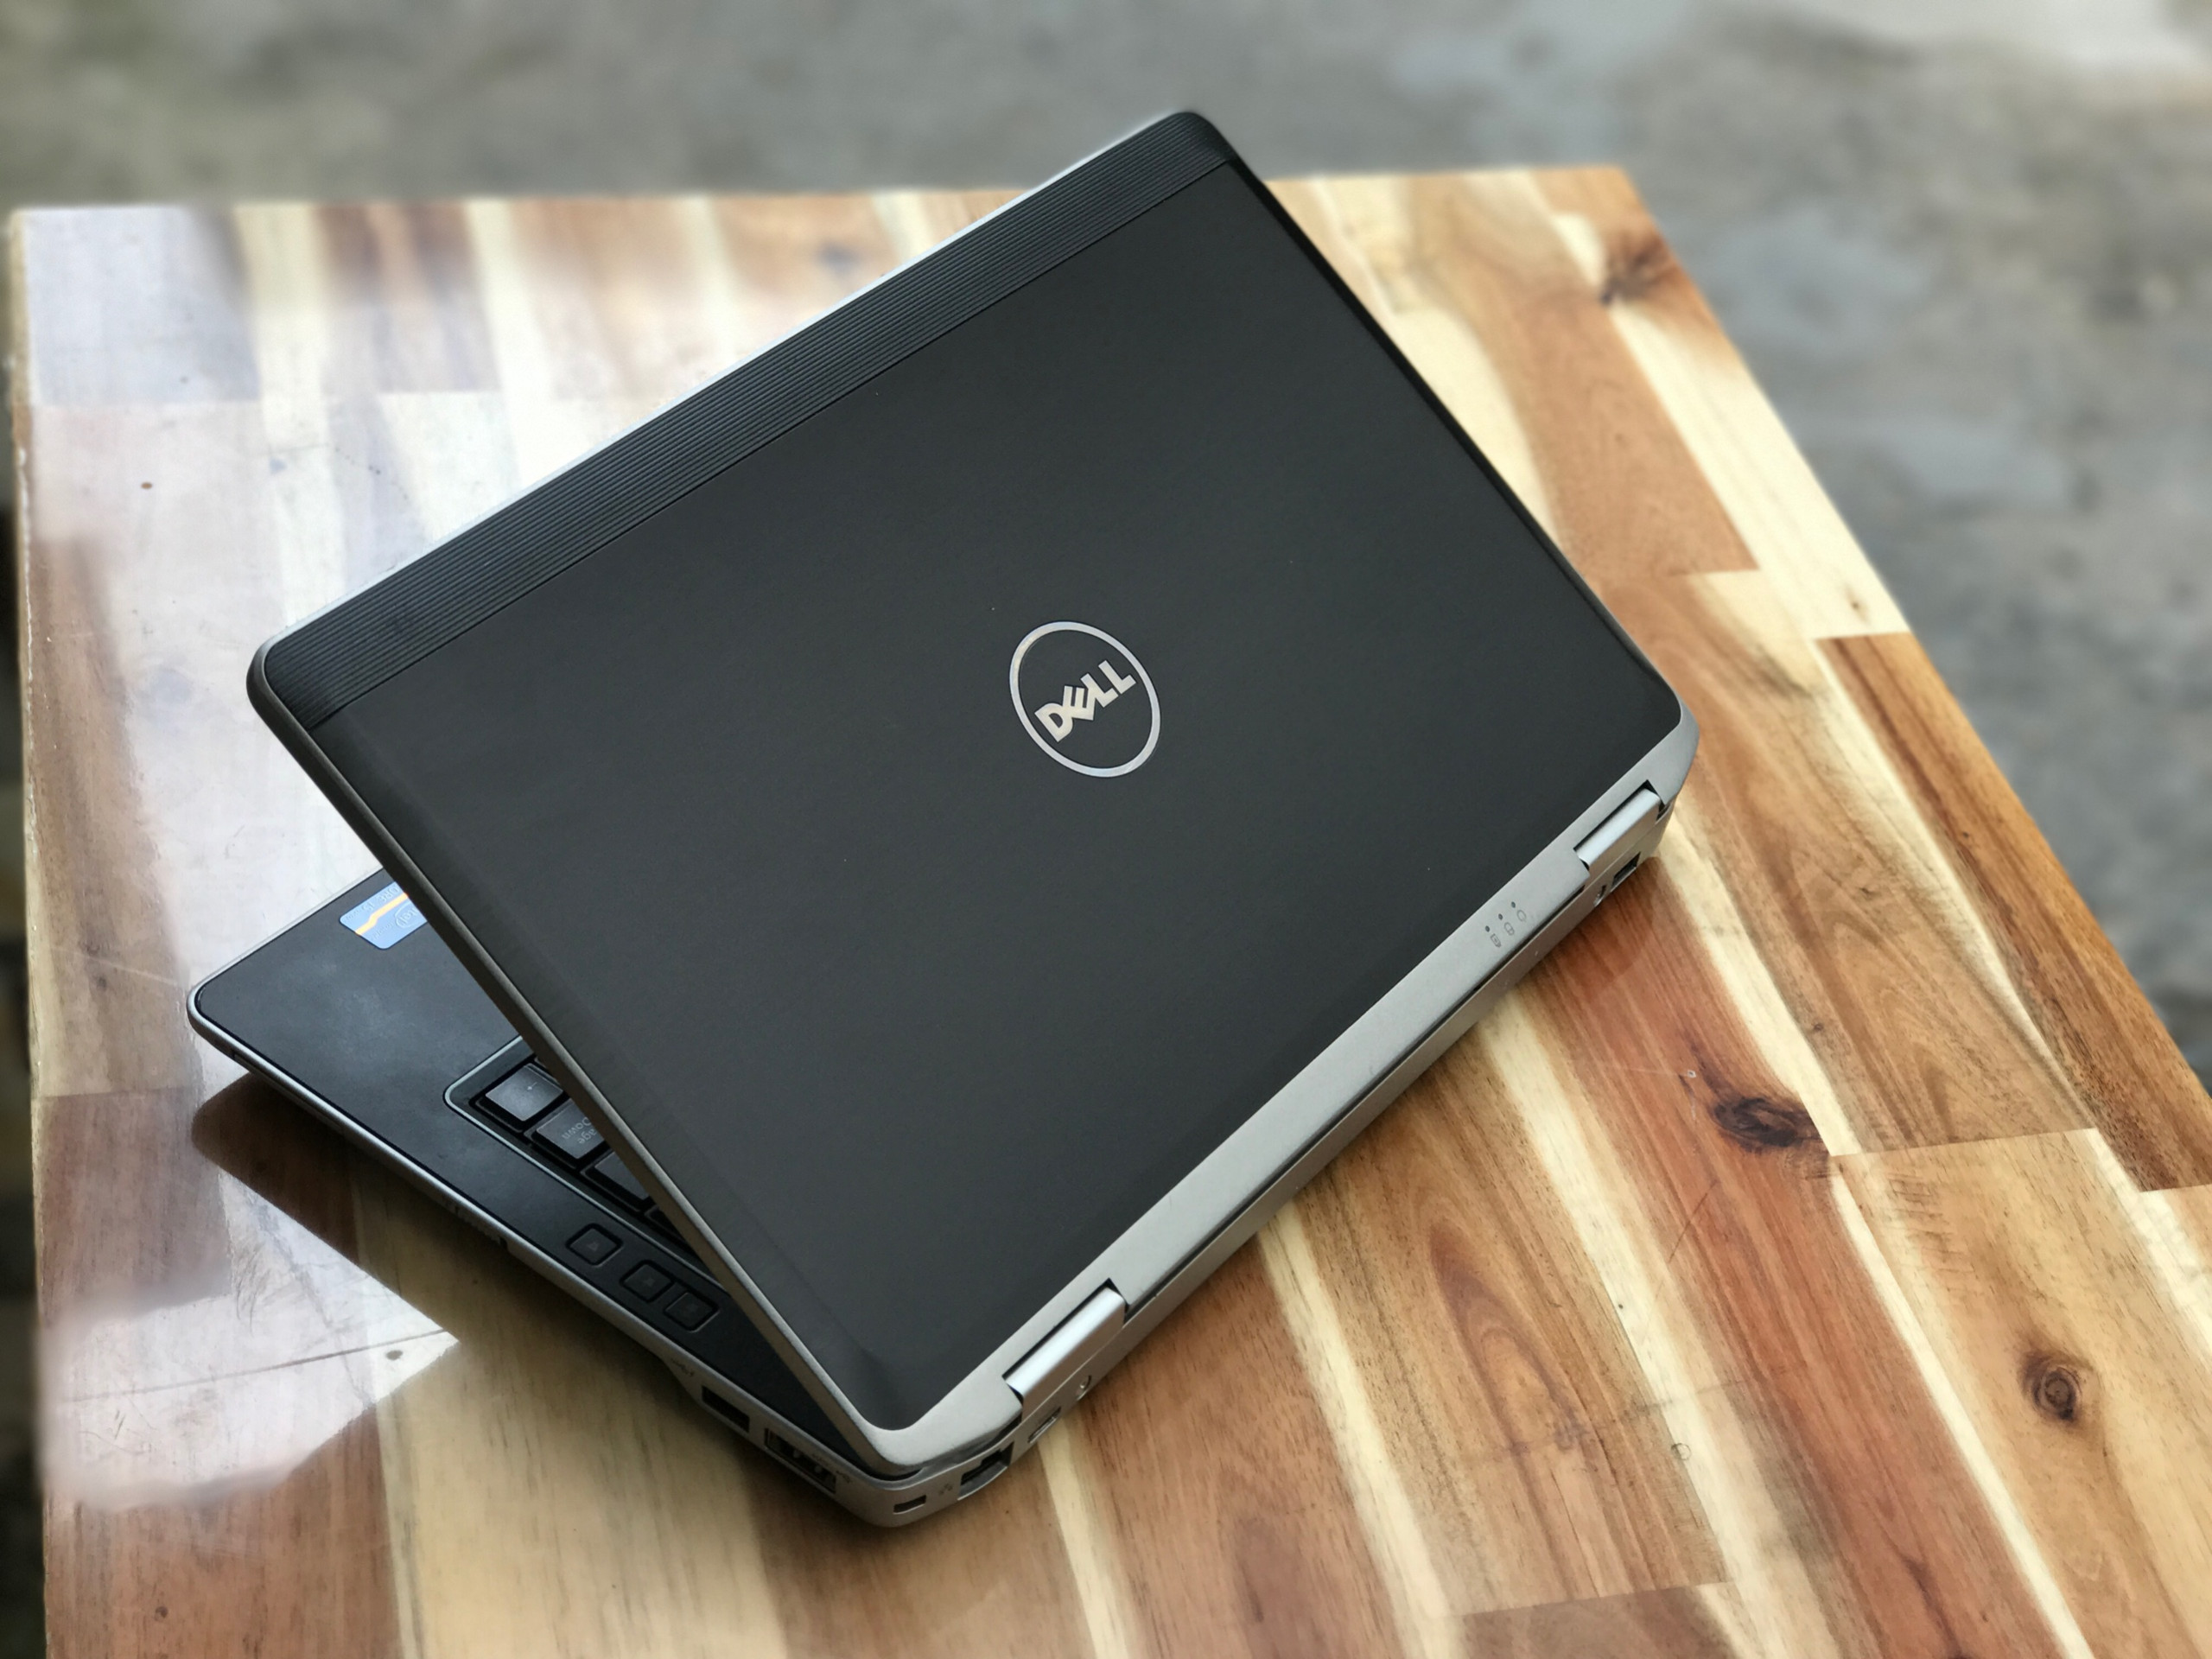 Laptop Dell Latitude E6420, i5 2520M 4G 320G Đẹp zin 100% Giá rẻ